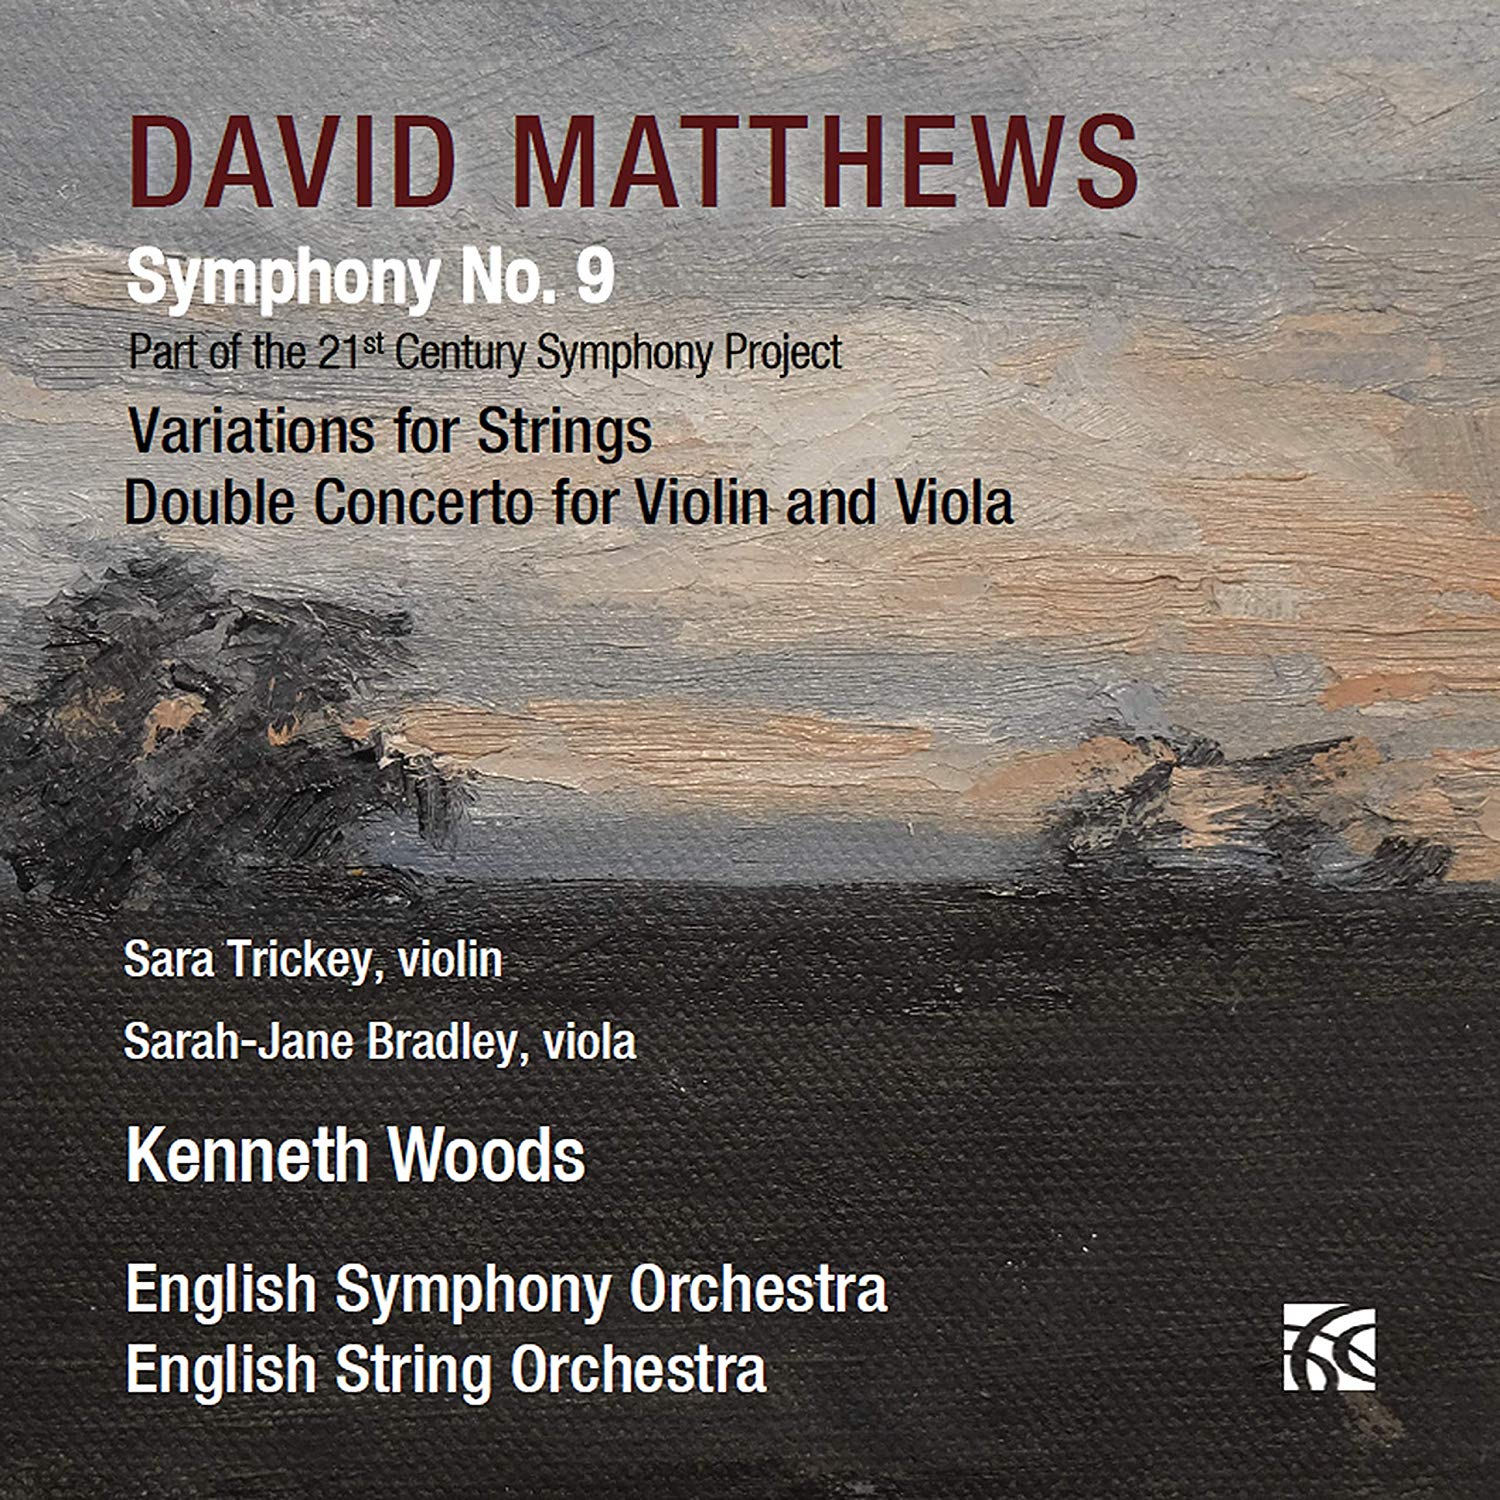 American Record Guide on David Matthews Symphony No. 9